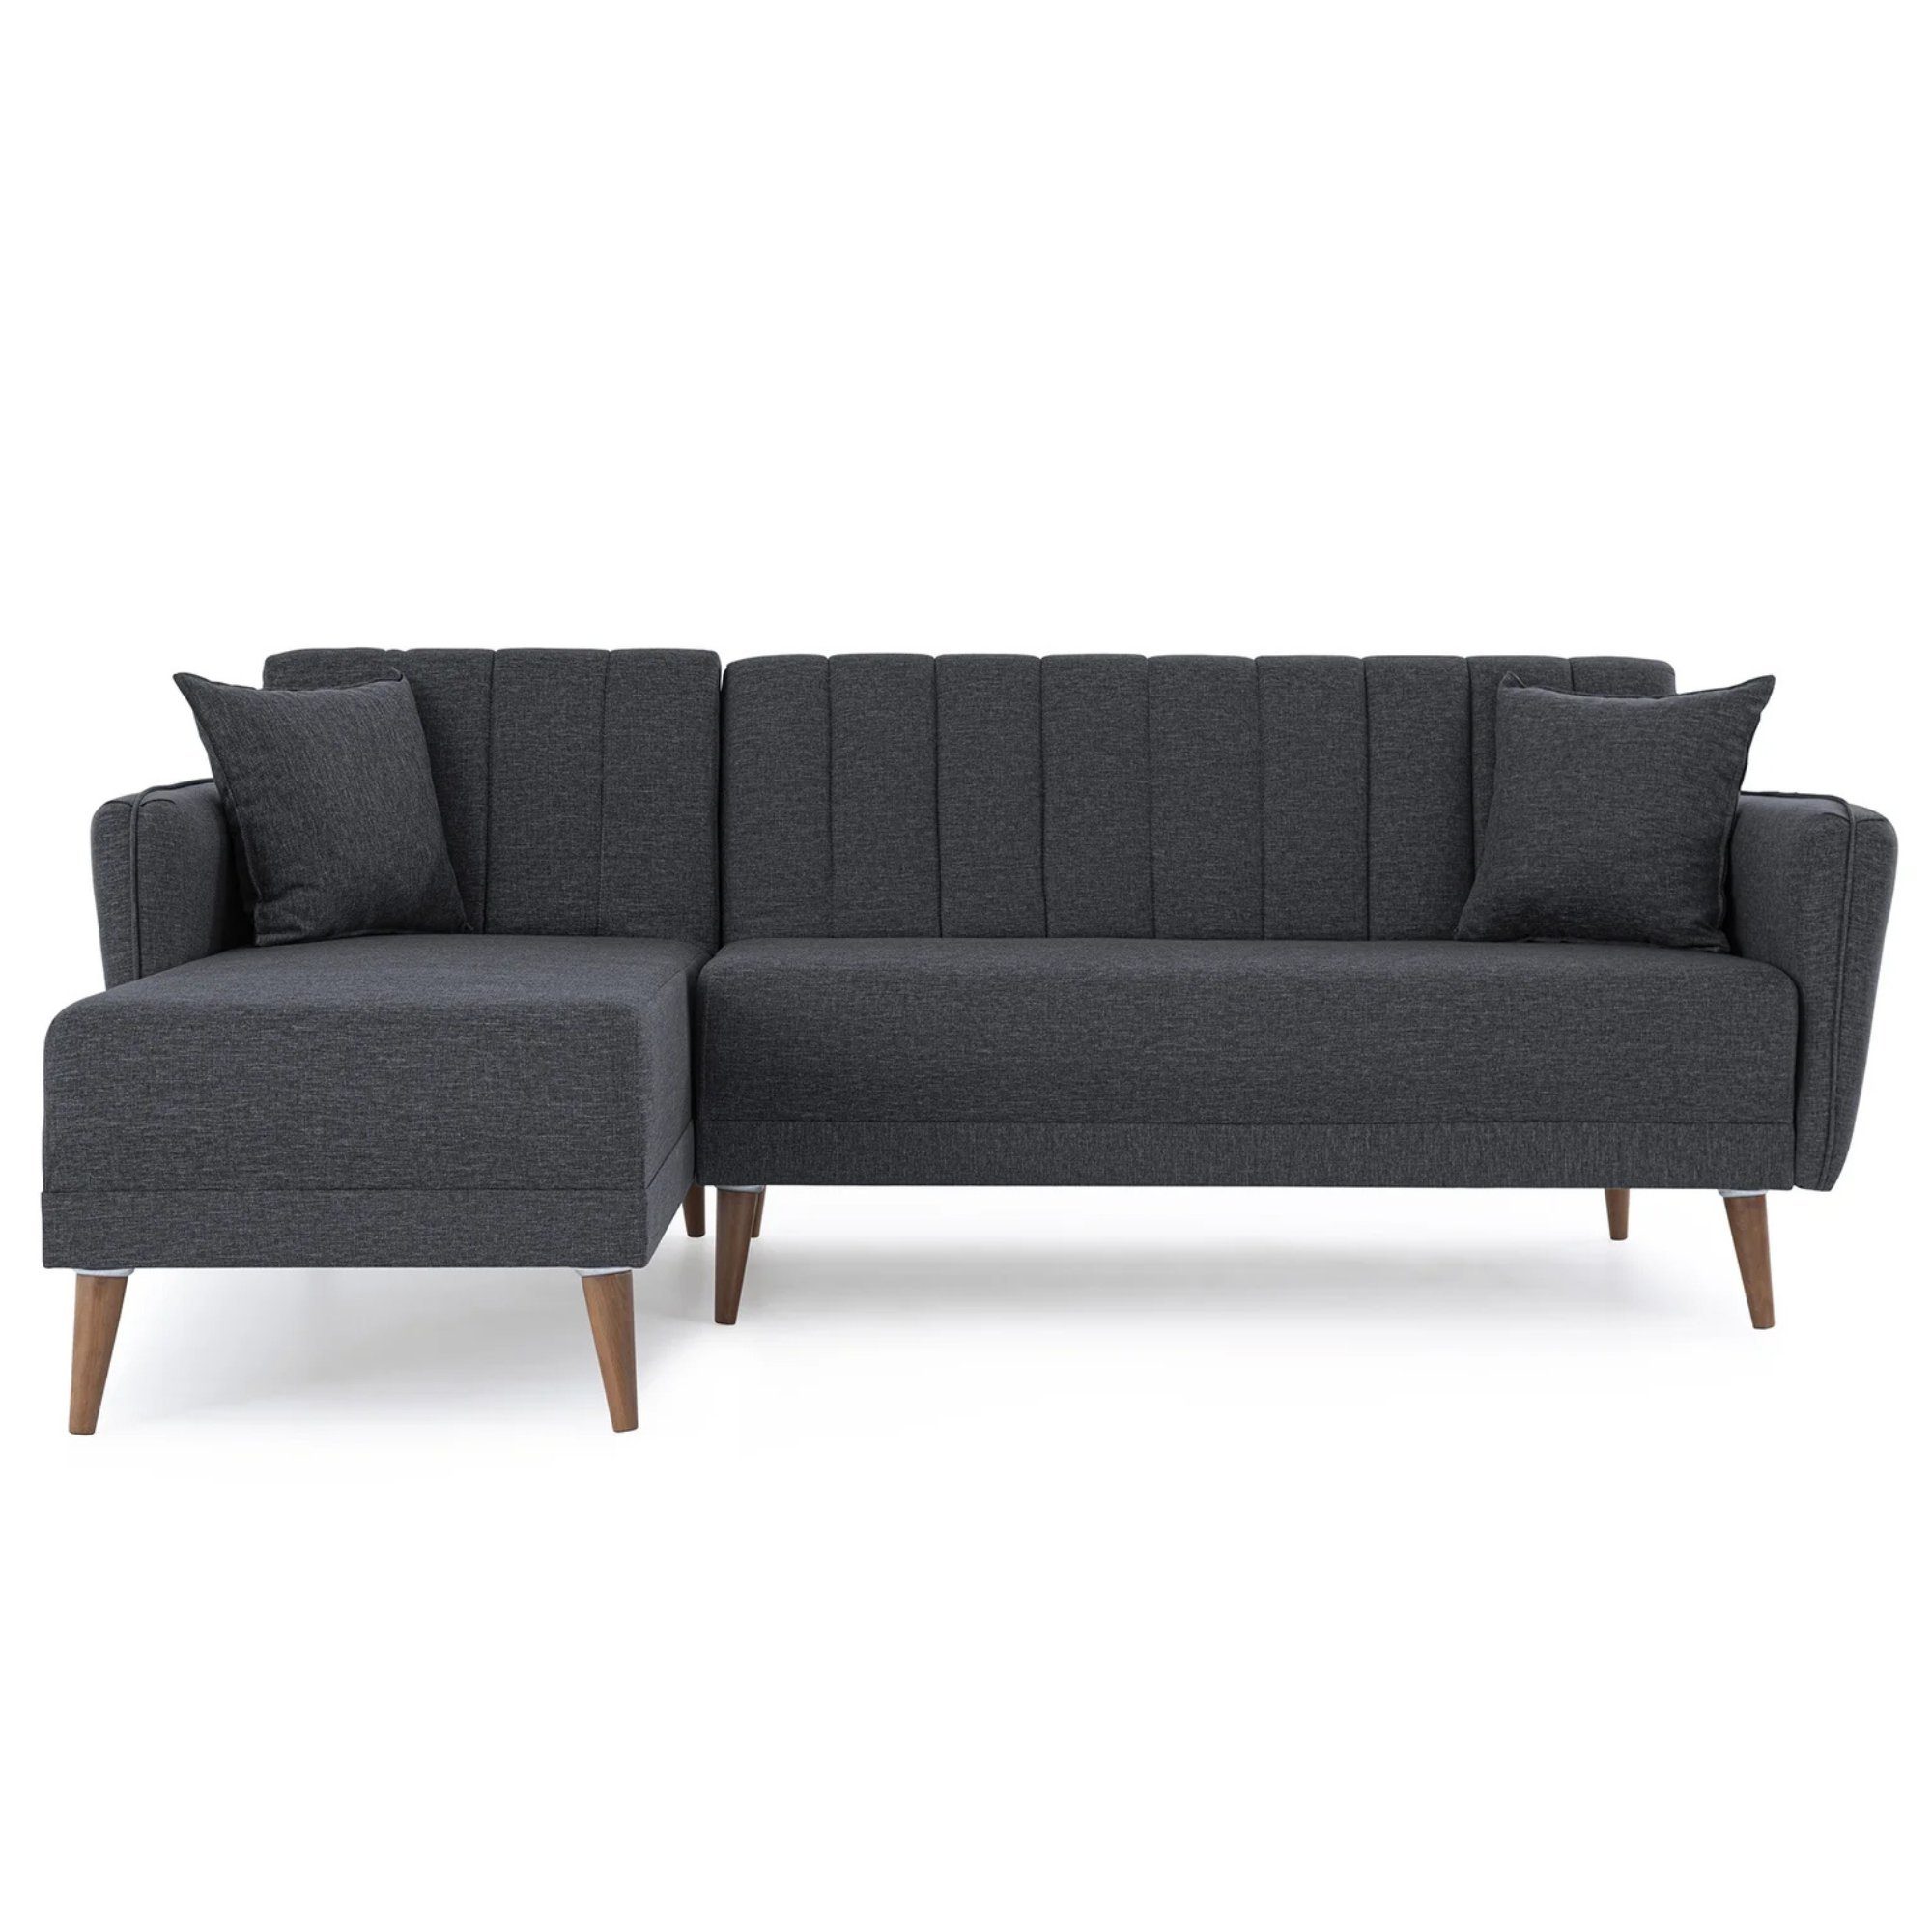 Gozos Ecksofa Gozos Mammo Sitzgruppe Ecksofa, Bettfunktion Couch, 225 x 150 x 85 cm, mit Relaxfunktion Anthrazit